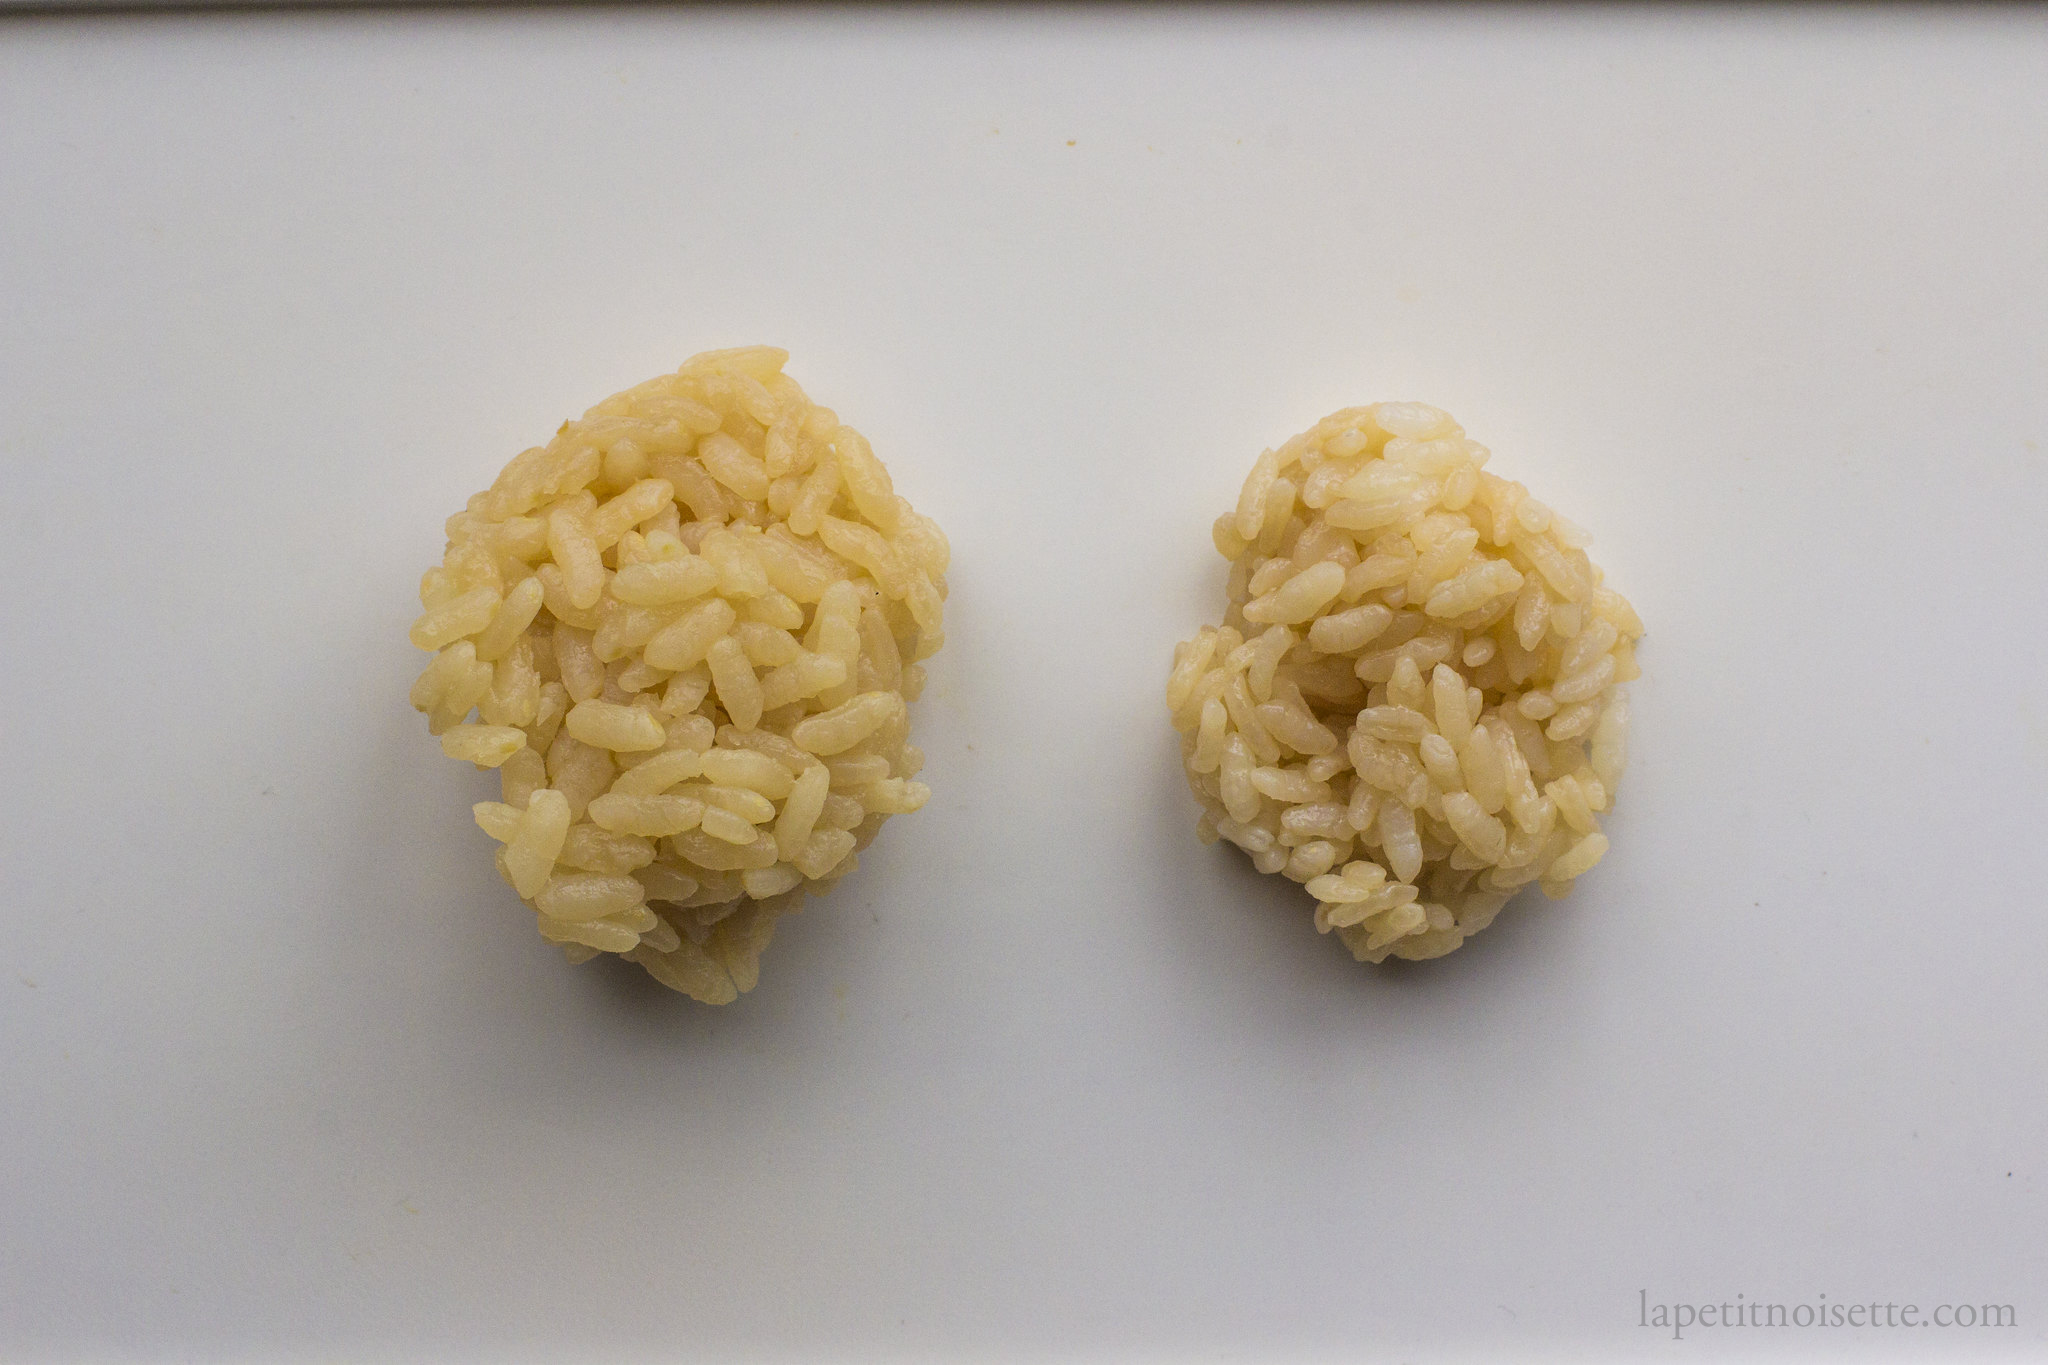 Three michelin starred sushi rice.